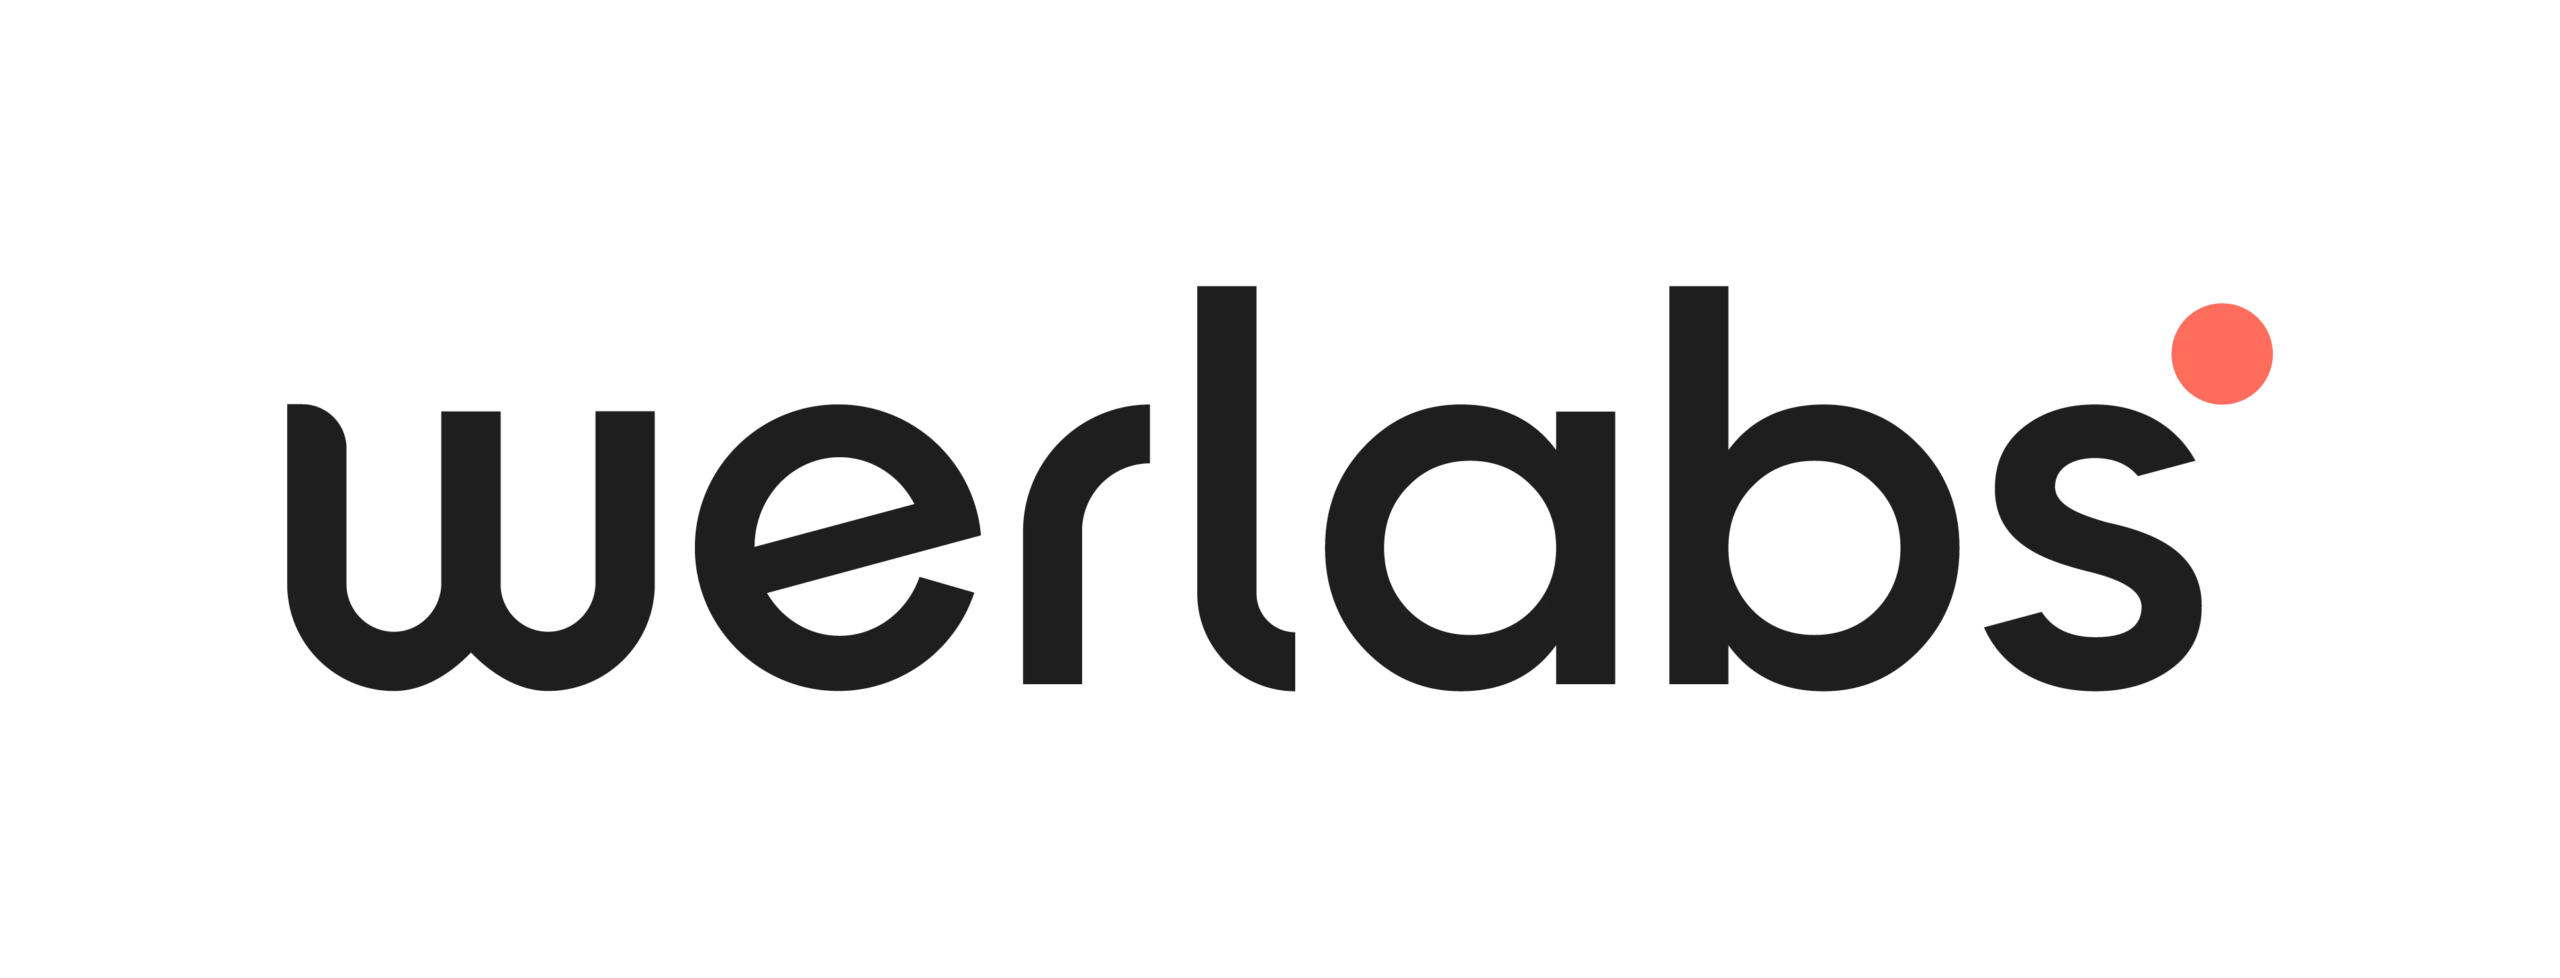 werlabs-logo-black